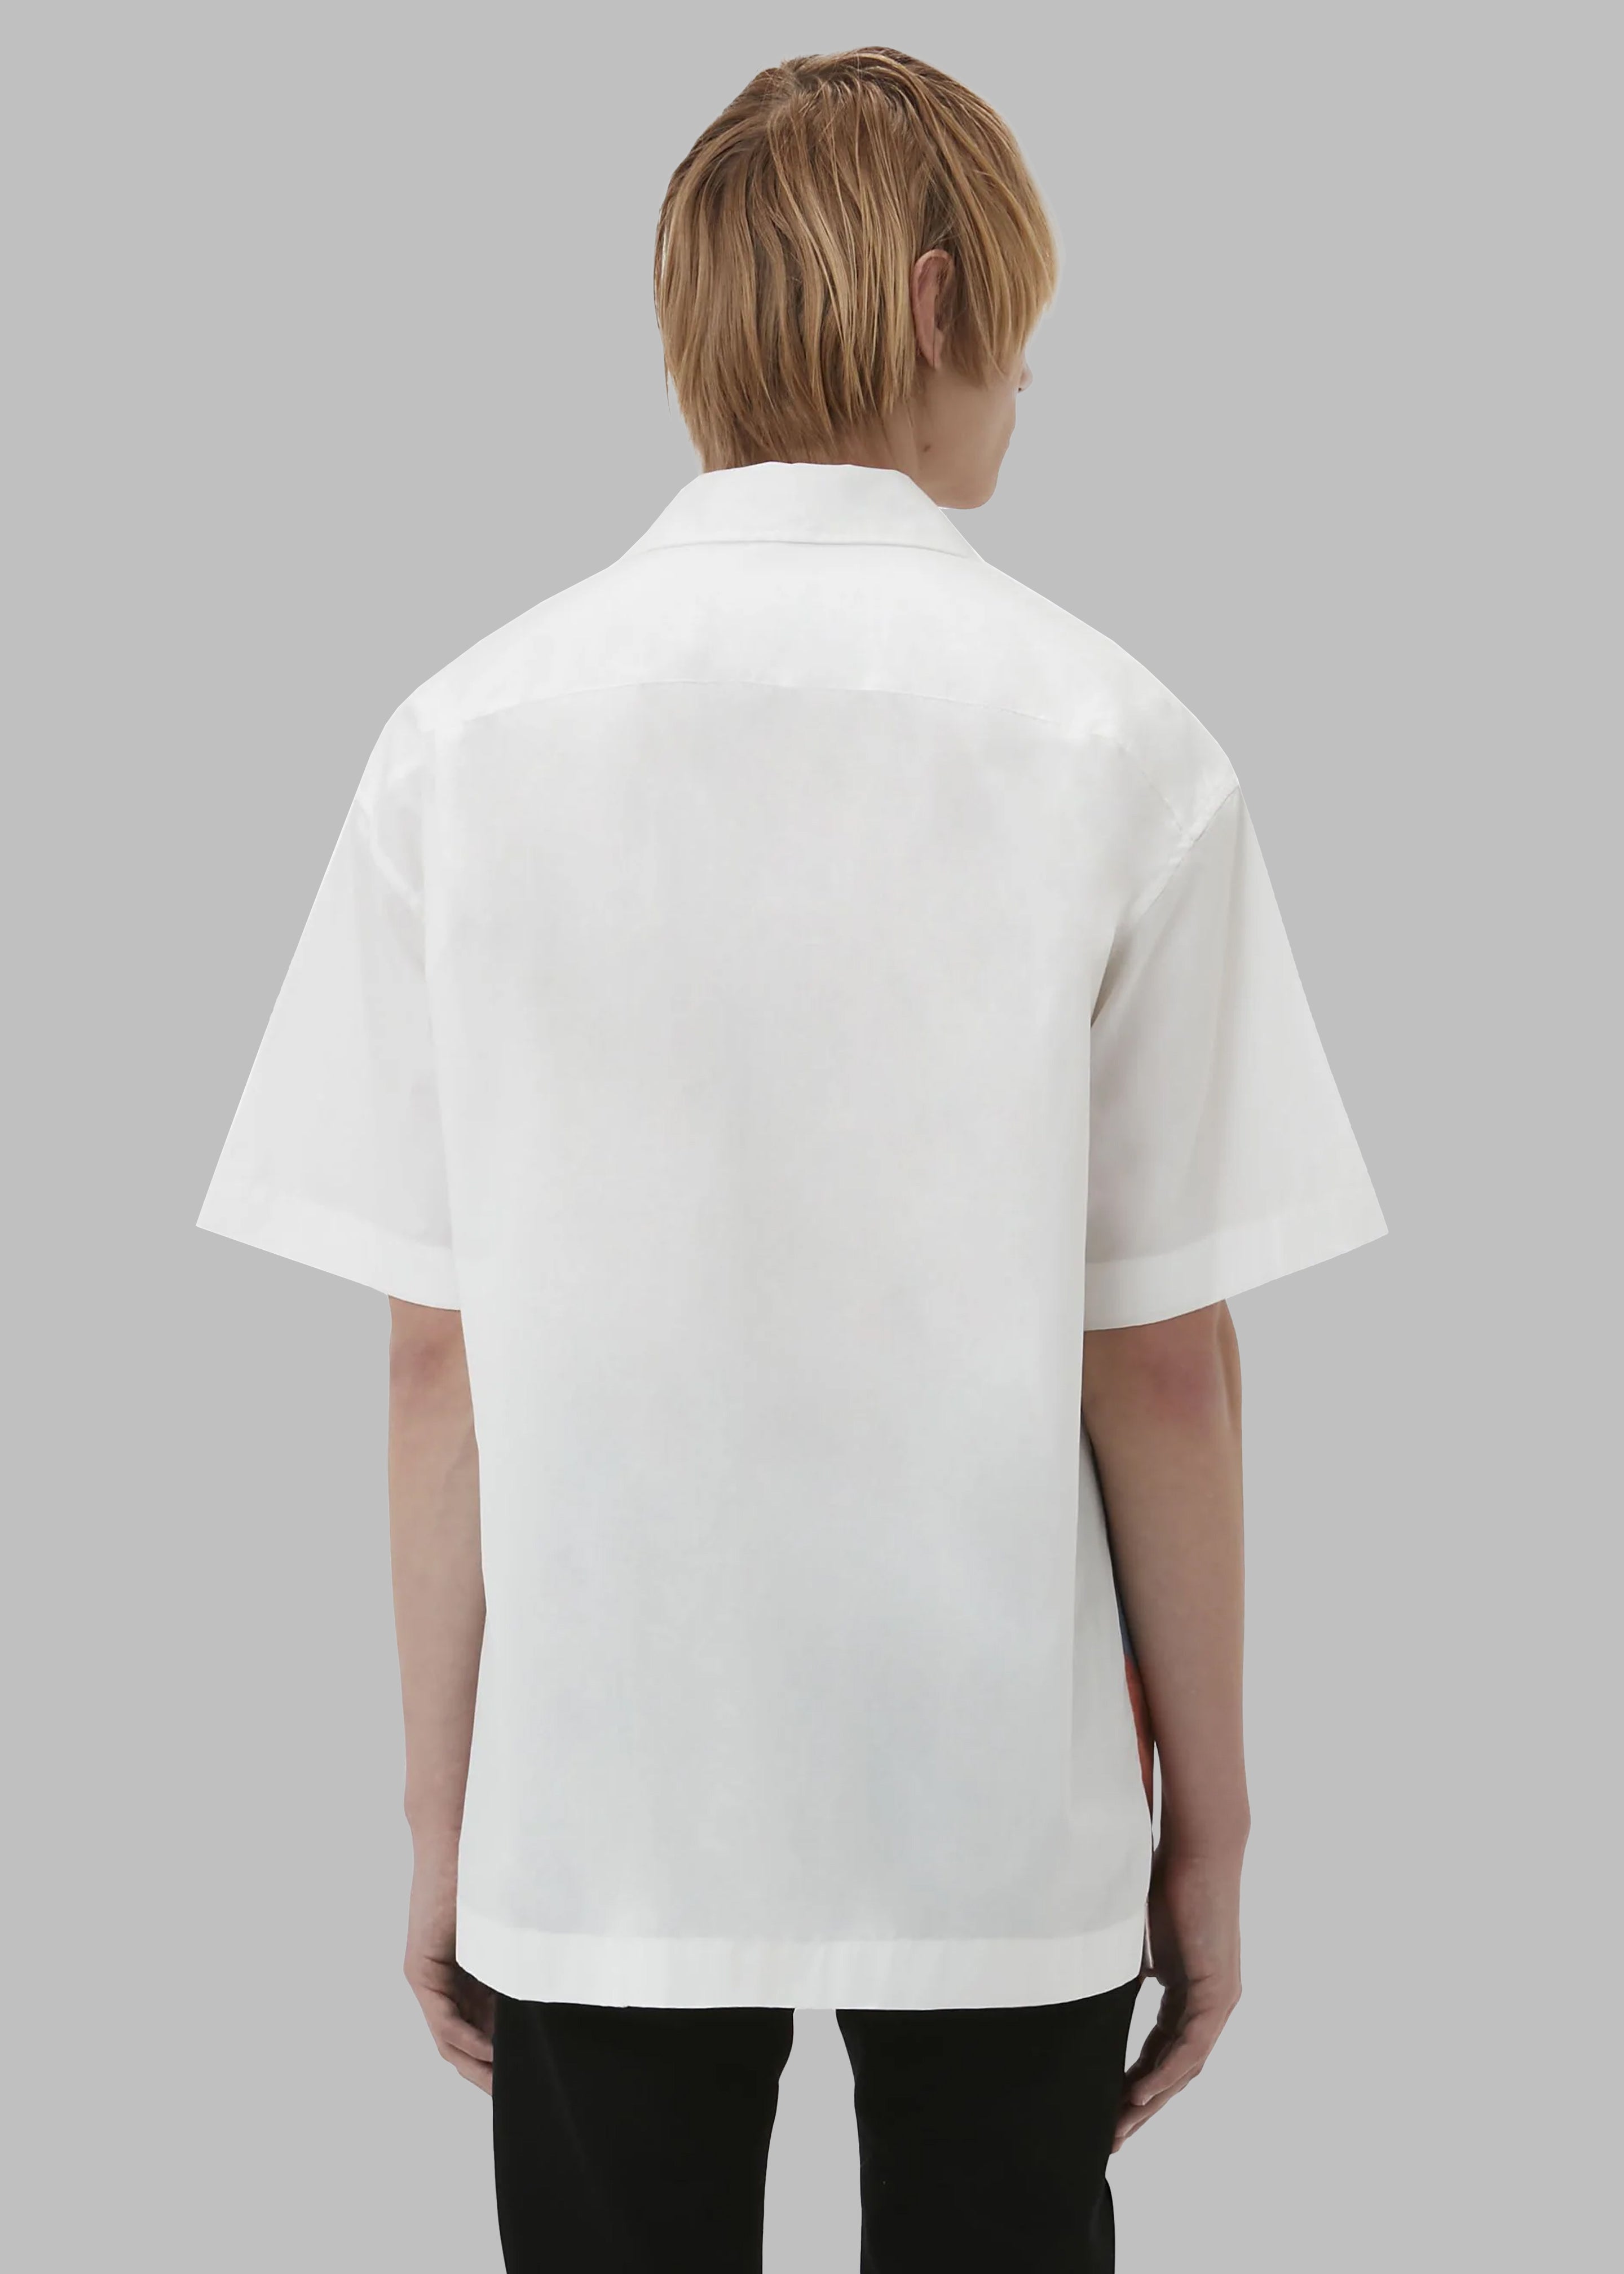 JW Anderson Profile Stud Printed Short Sleeve Shirt - White/Multi - 5